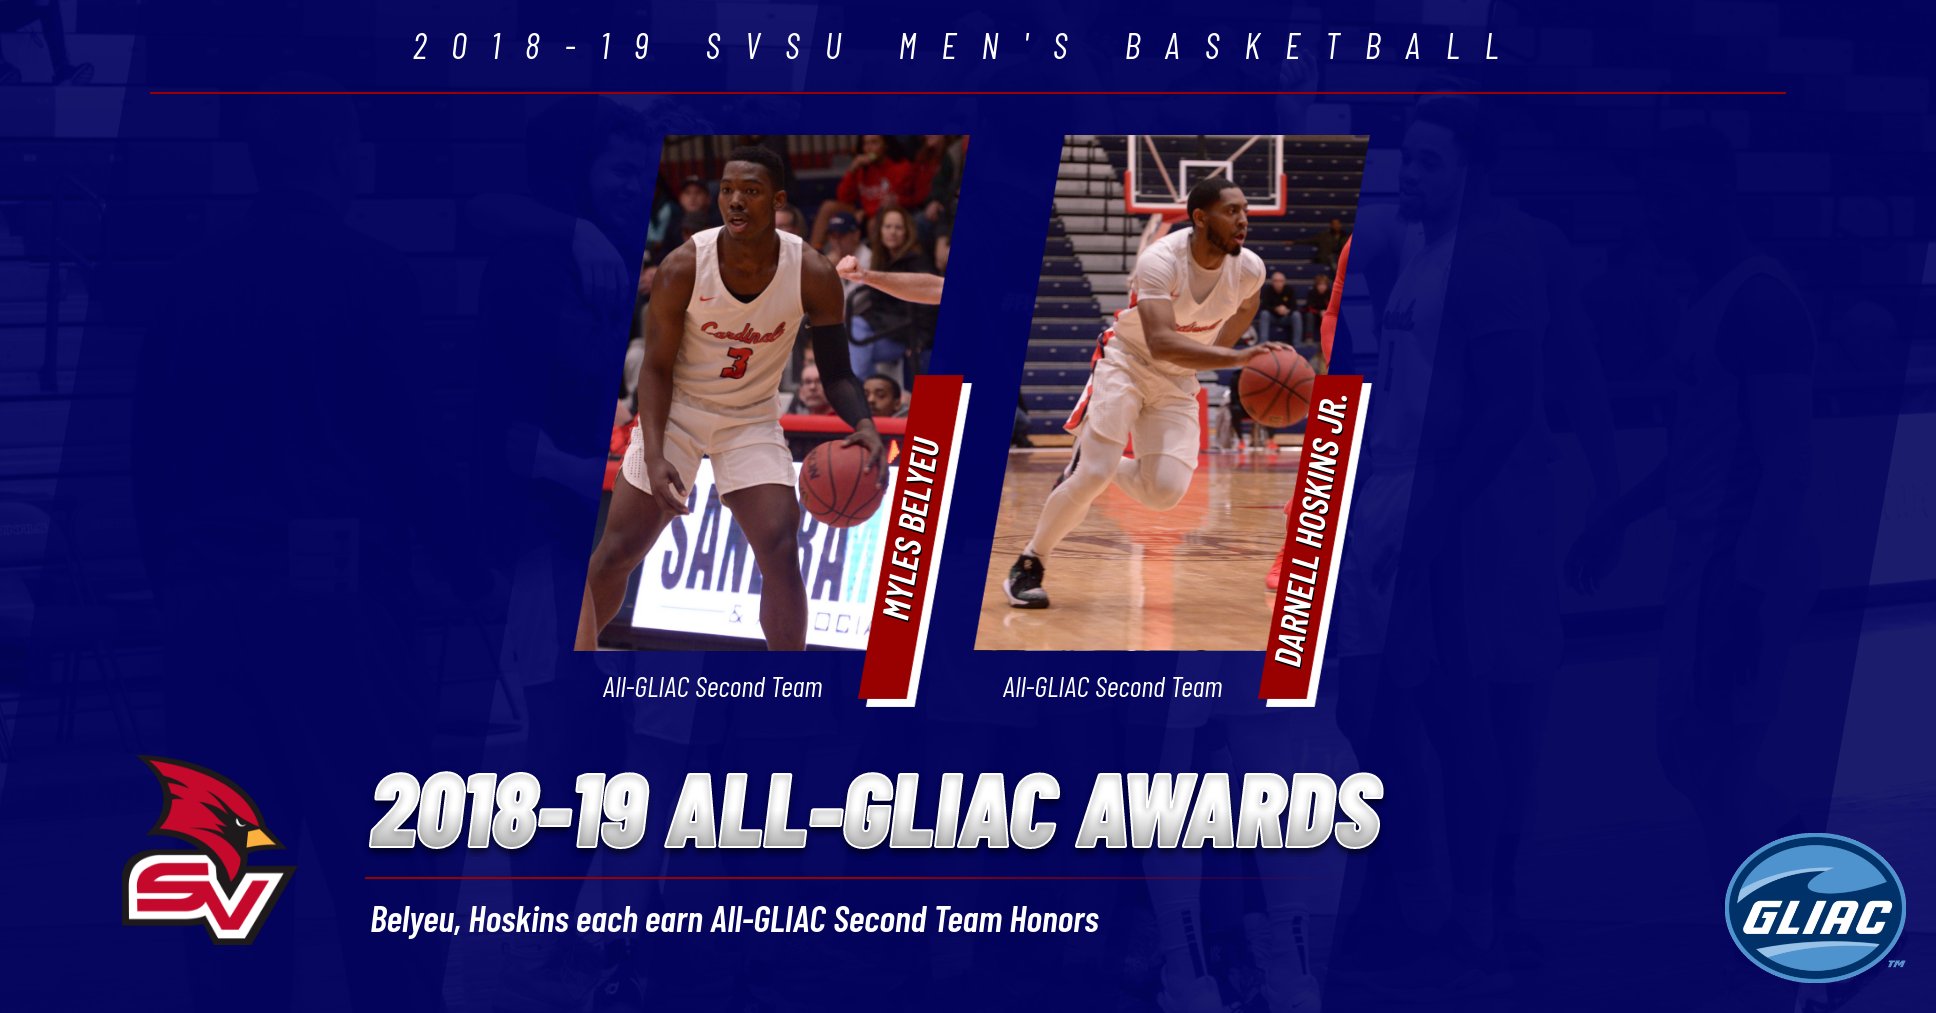 Belyeu, Hoskins earn 2018-19 All-GLIAC honors for SVSU